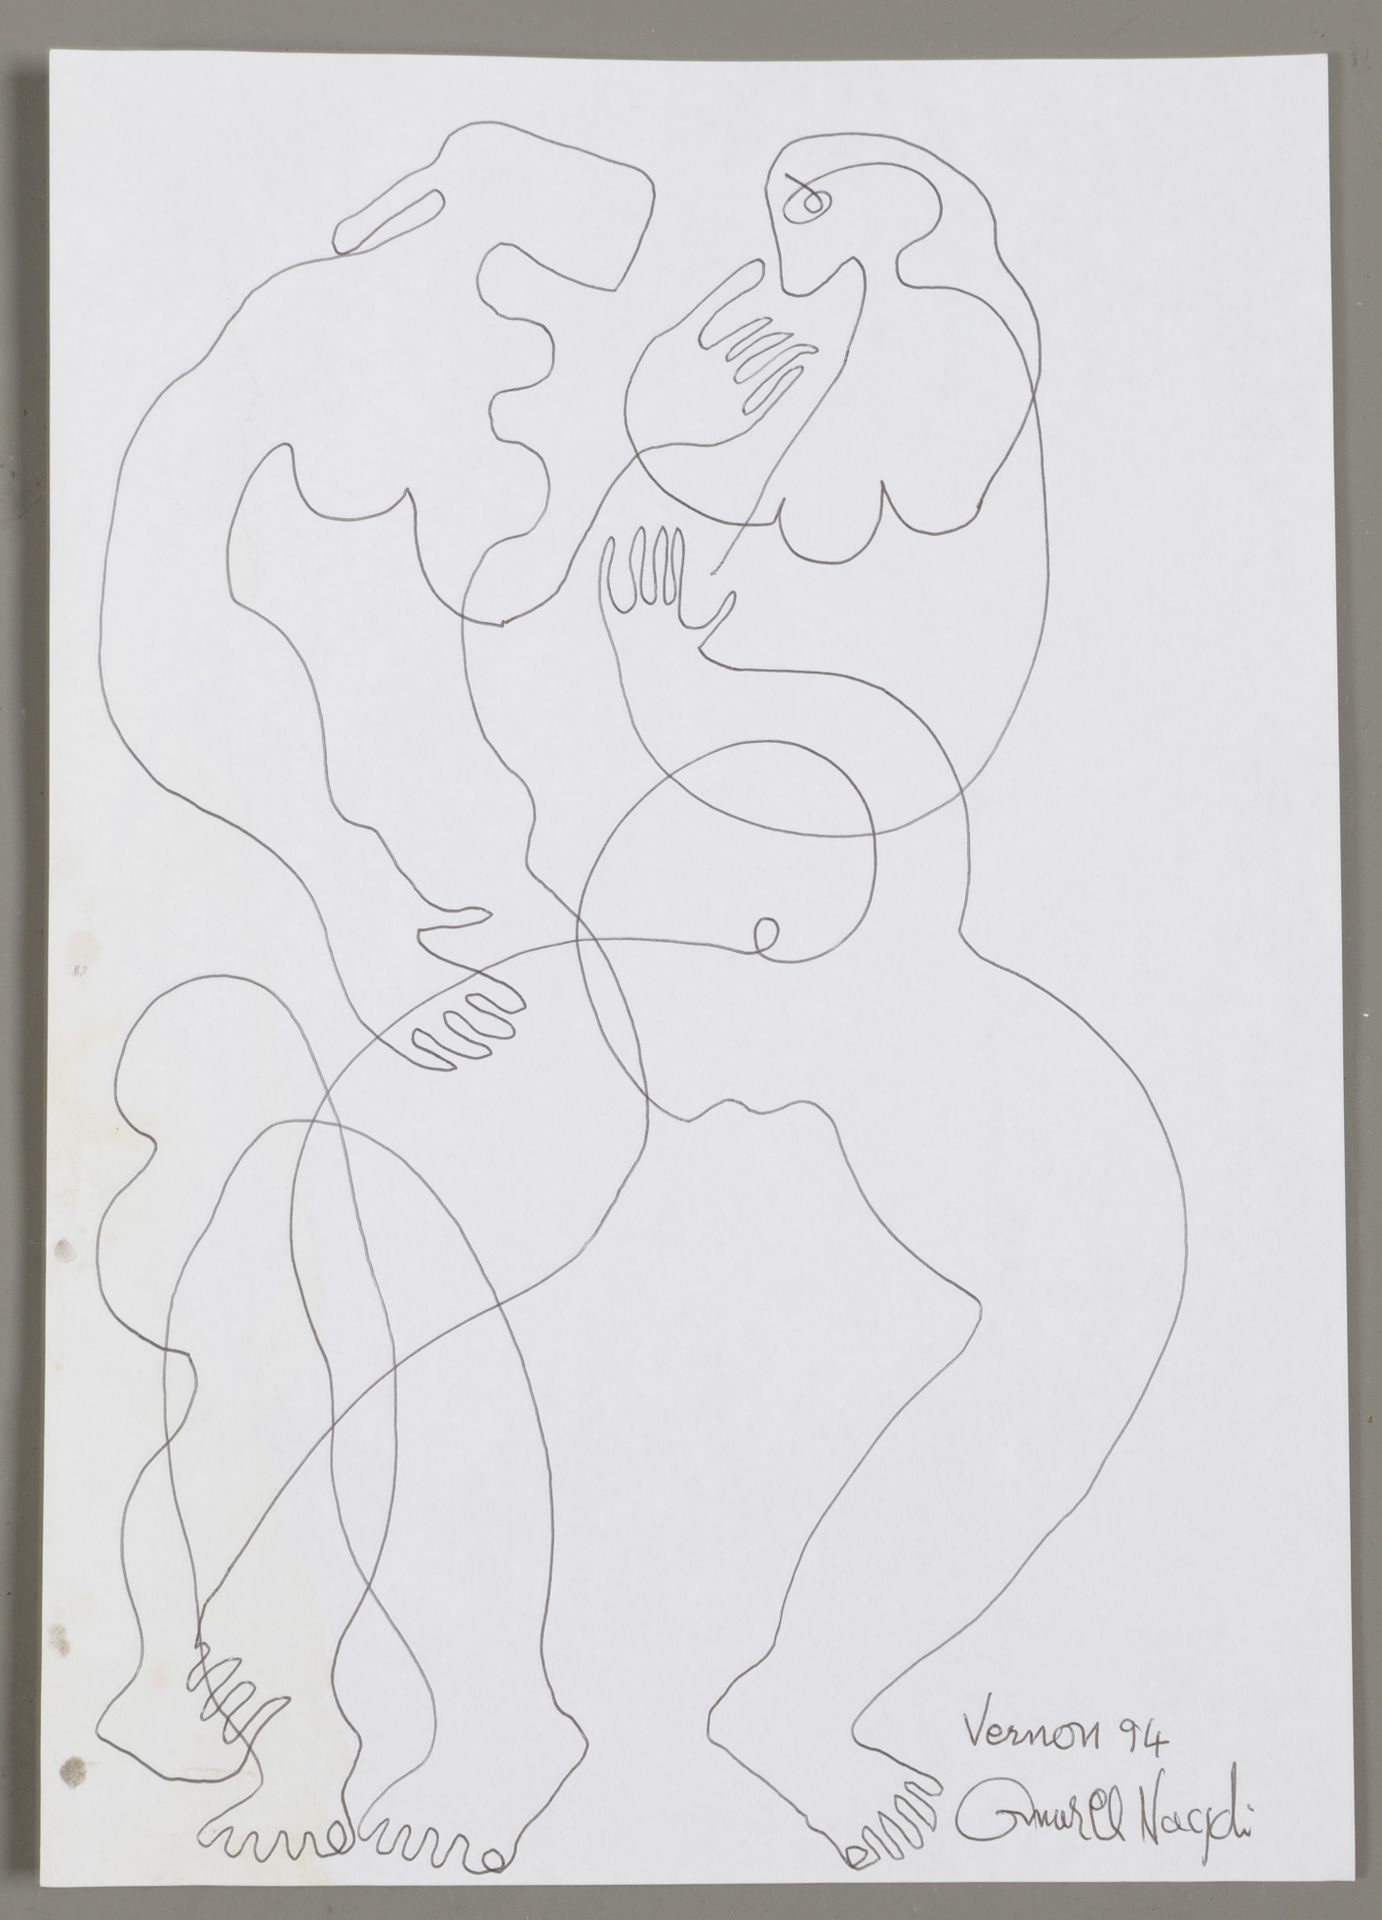 Null 奥马尔-埃尔-纳吉（1931-2019）。恋人》，1994年。有签名的Biros画作，位于 "Vernon"，右下方有日期。30 x 21 厘米